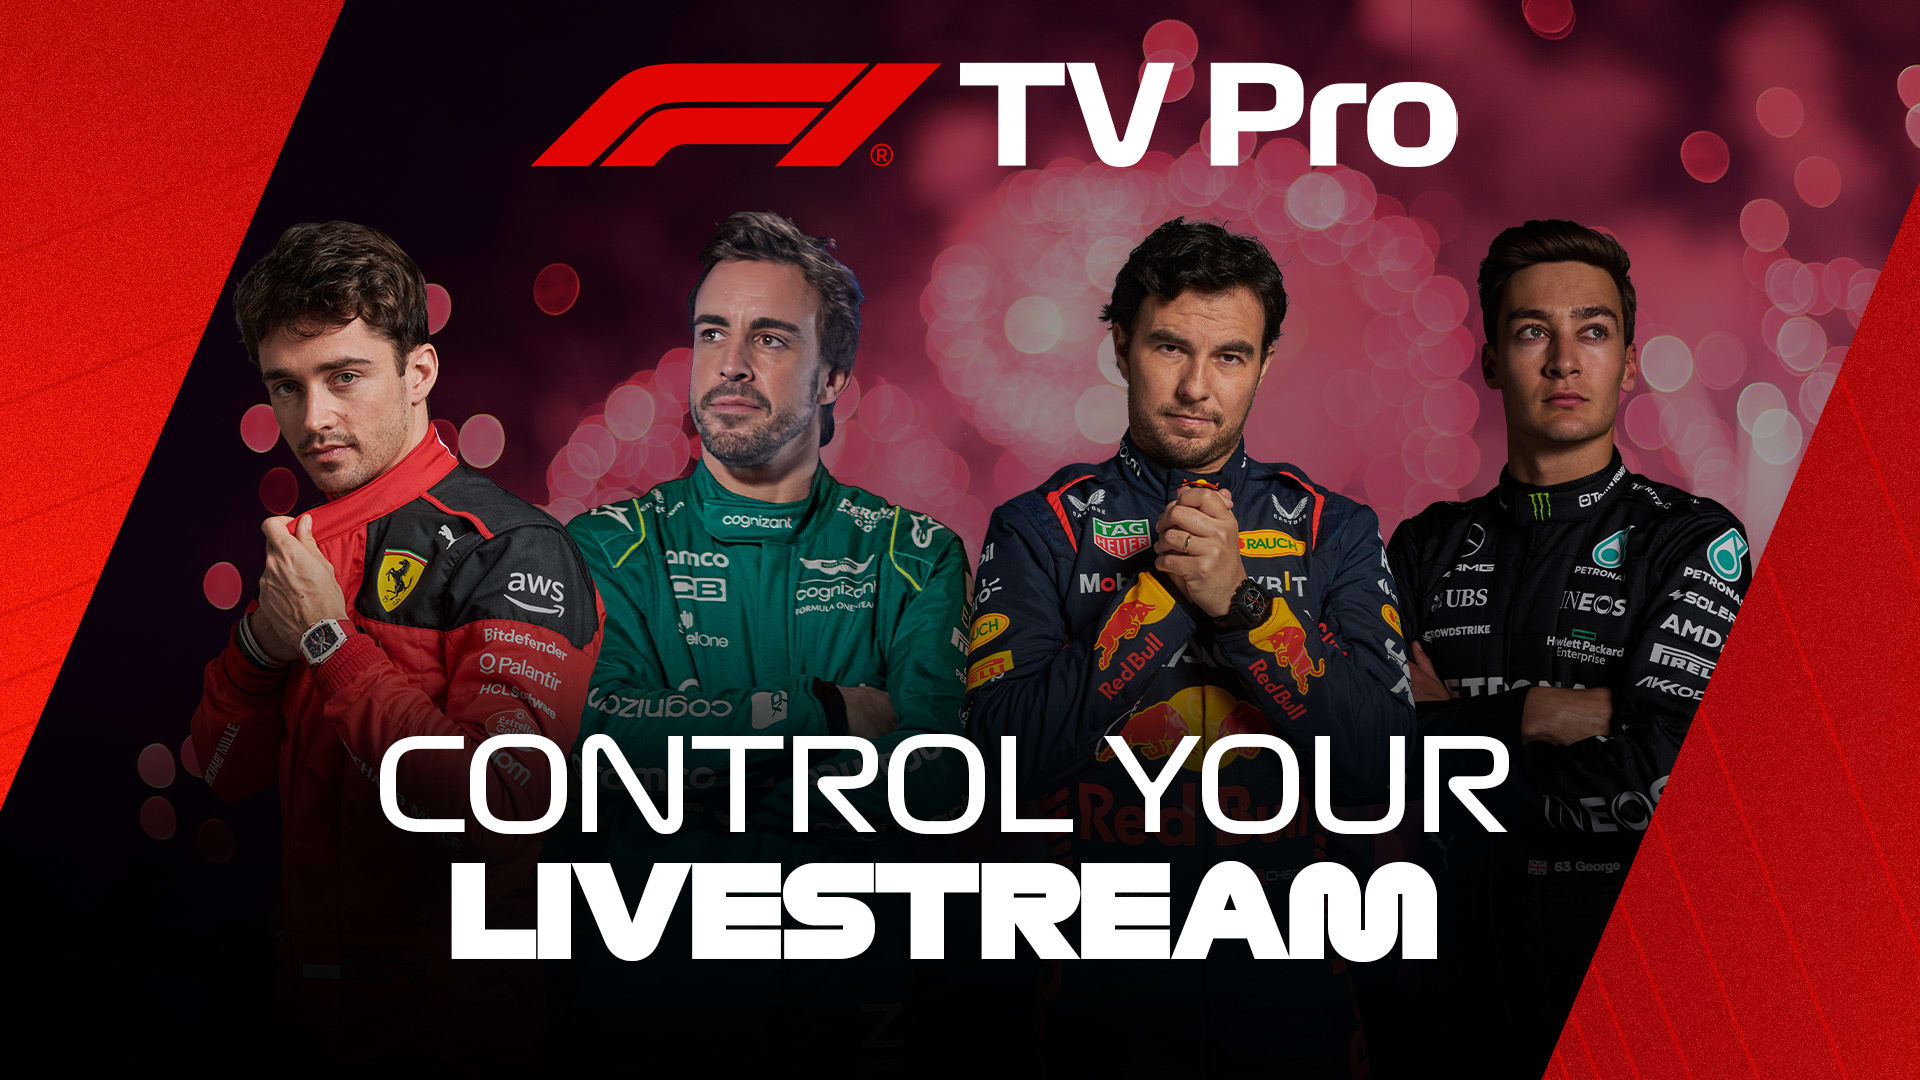 How to stream the 2023 Dutch Grand Prix on F1 TV Pro Formula 1®